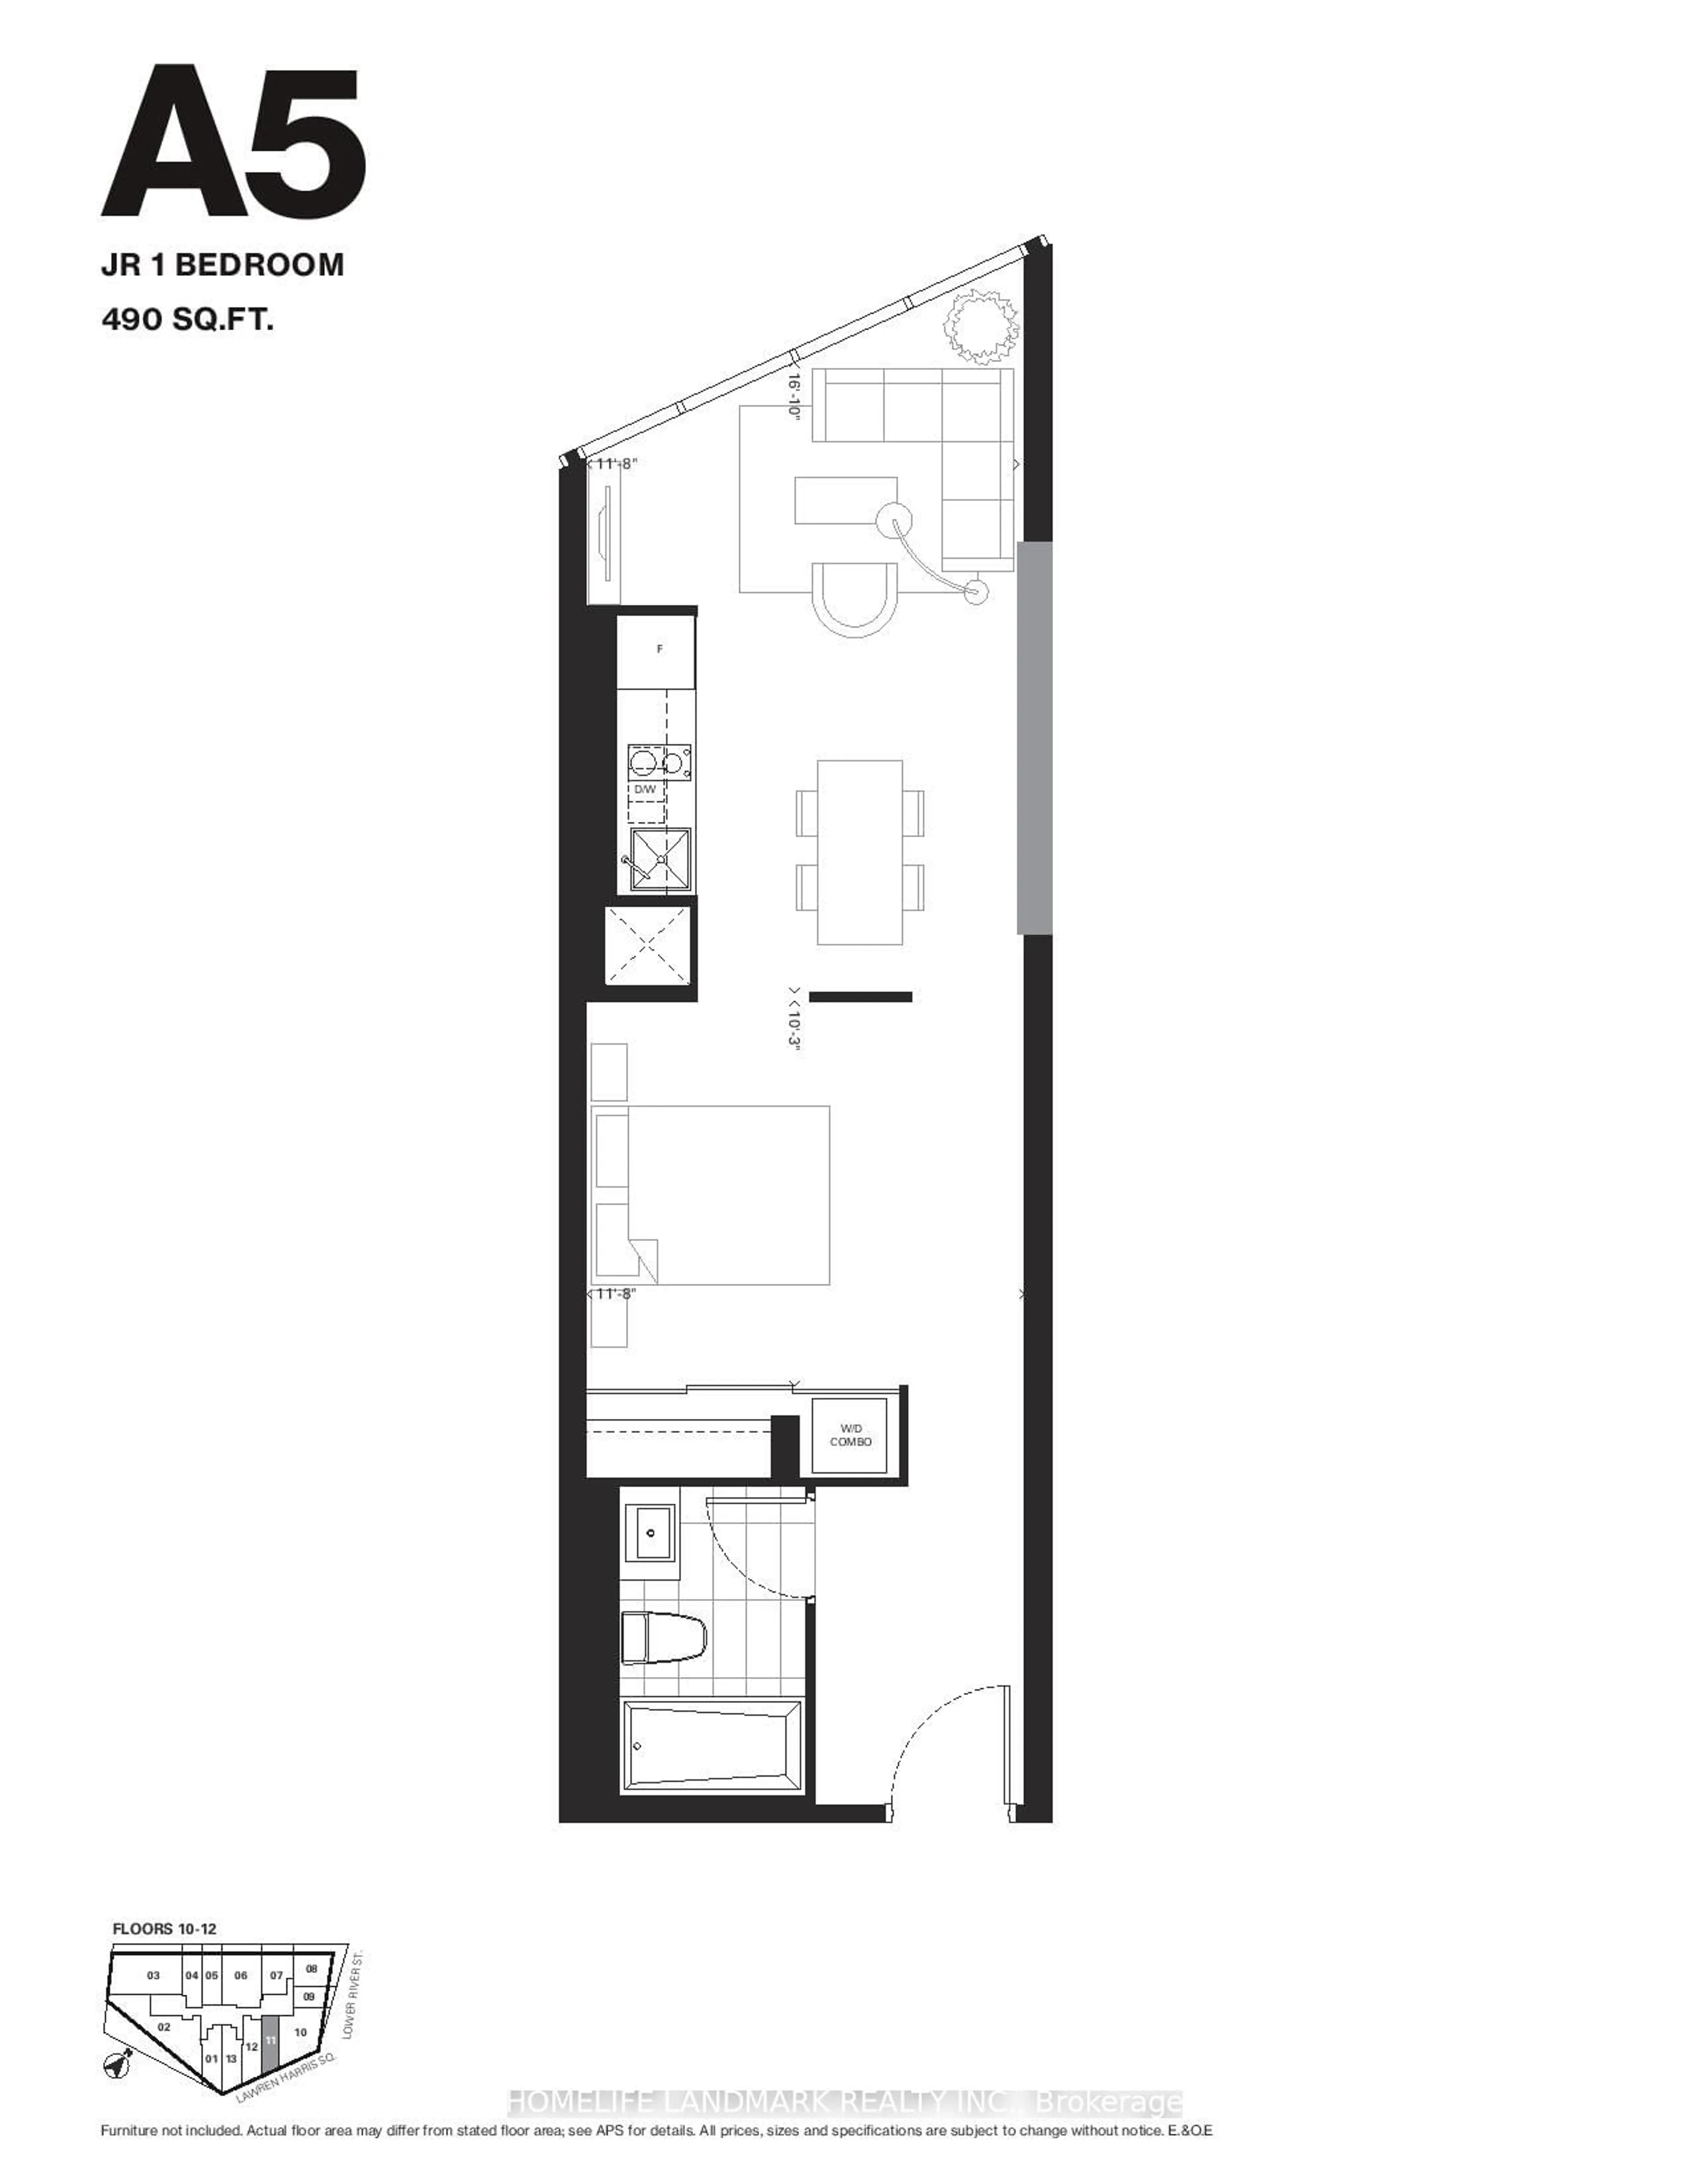 Floor plan for 21 Lawren Harris Sq #1211, Toronto Ontario M5A 0T4